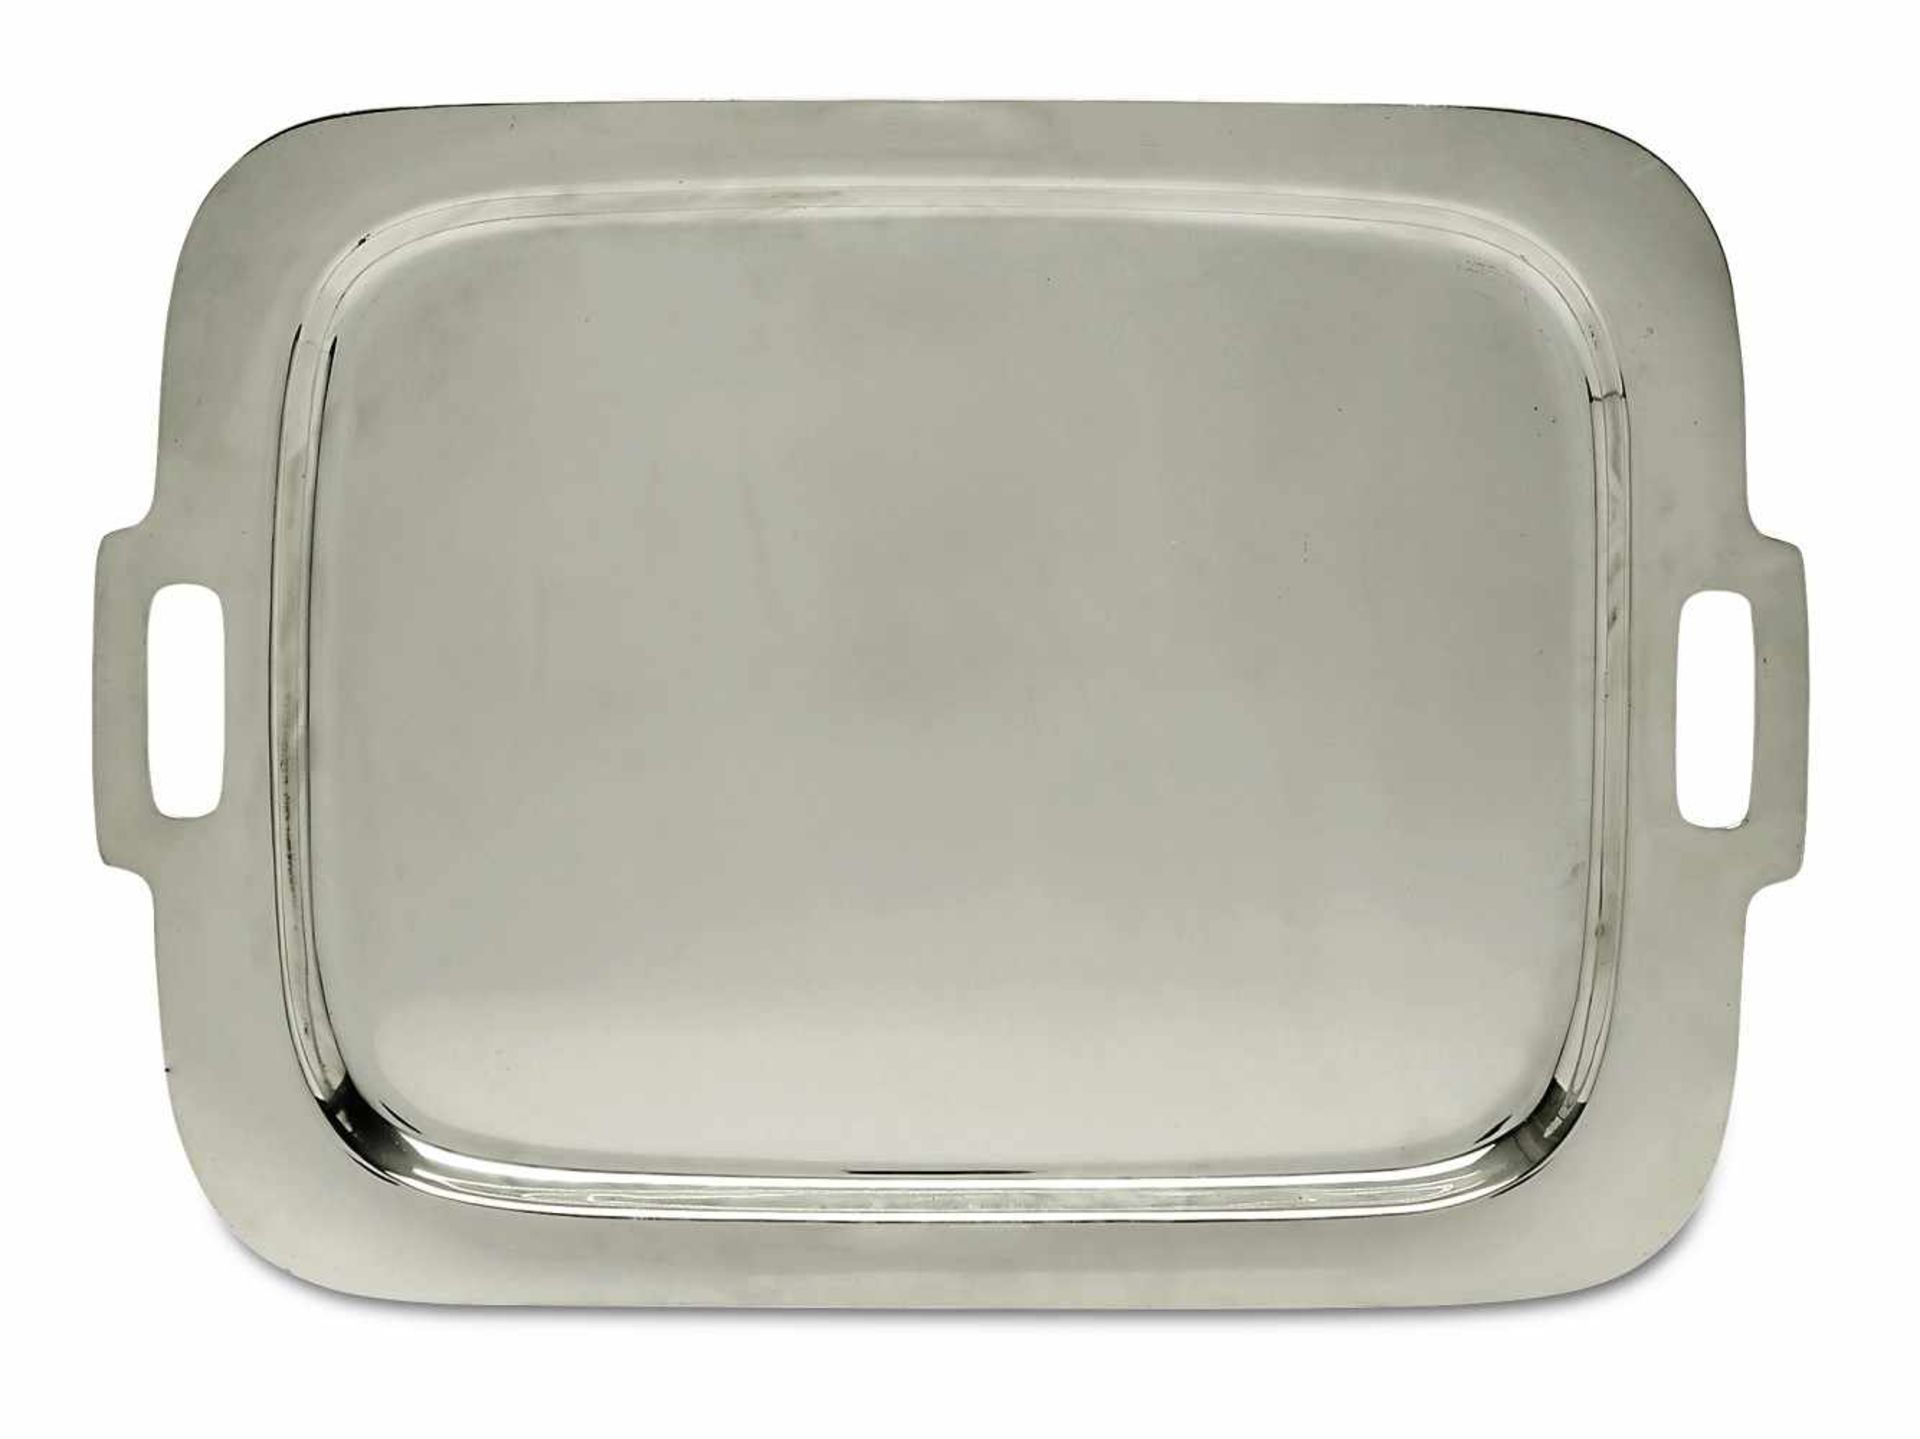 Tablett Gardner (Massachusetts), Frank W. Smith Silver Co., Art Deco Silber. Glatte rechteckige Form